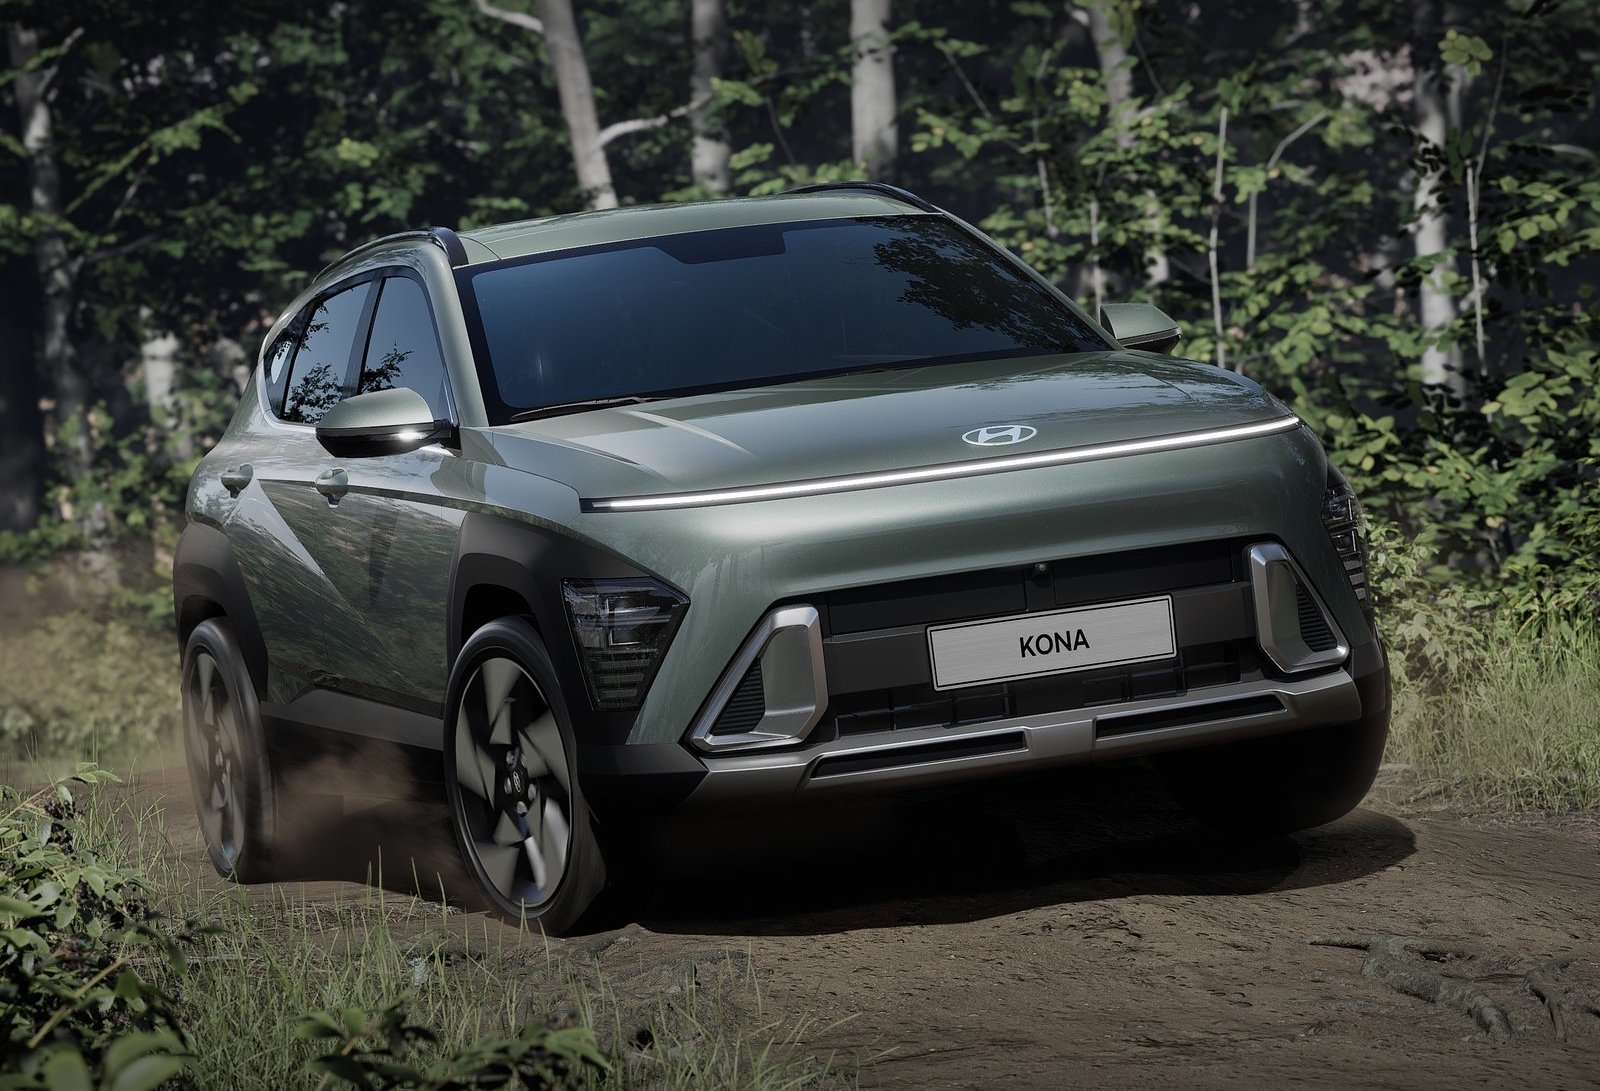 2023 Hyundai Kona unveiled with futuristic new design